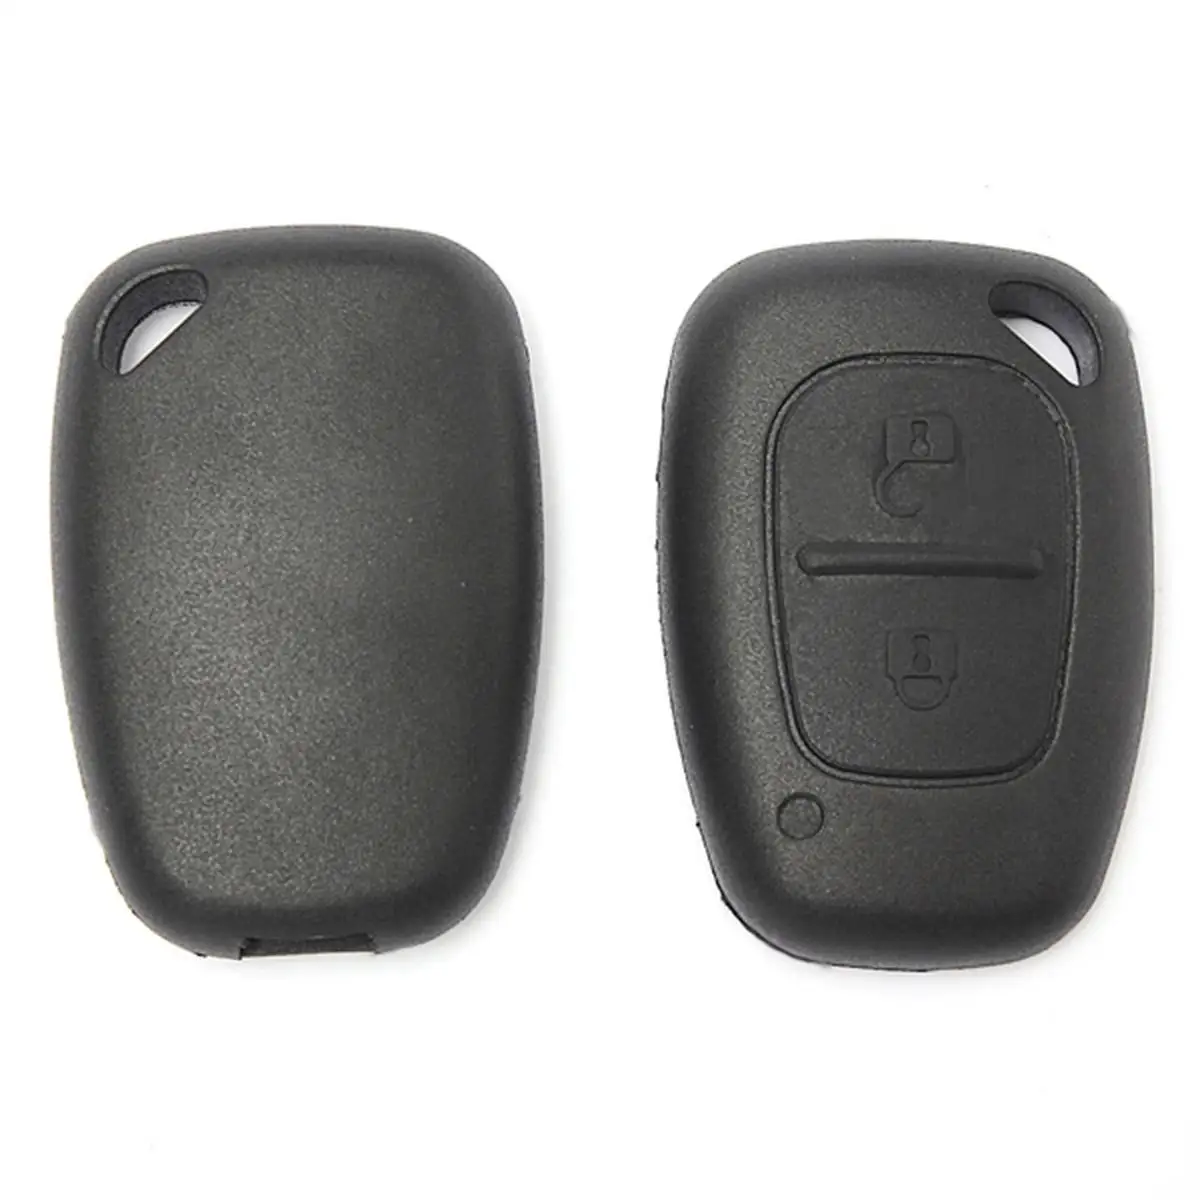 Замена общие 2 кнопки без ключа дистанционного оболочки чехол Брелок для Renault Opel для Vauxhall для Nissan Vivaro Movano trafest